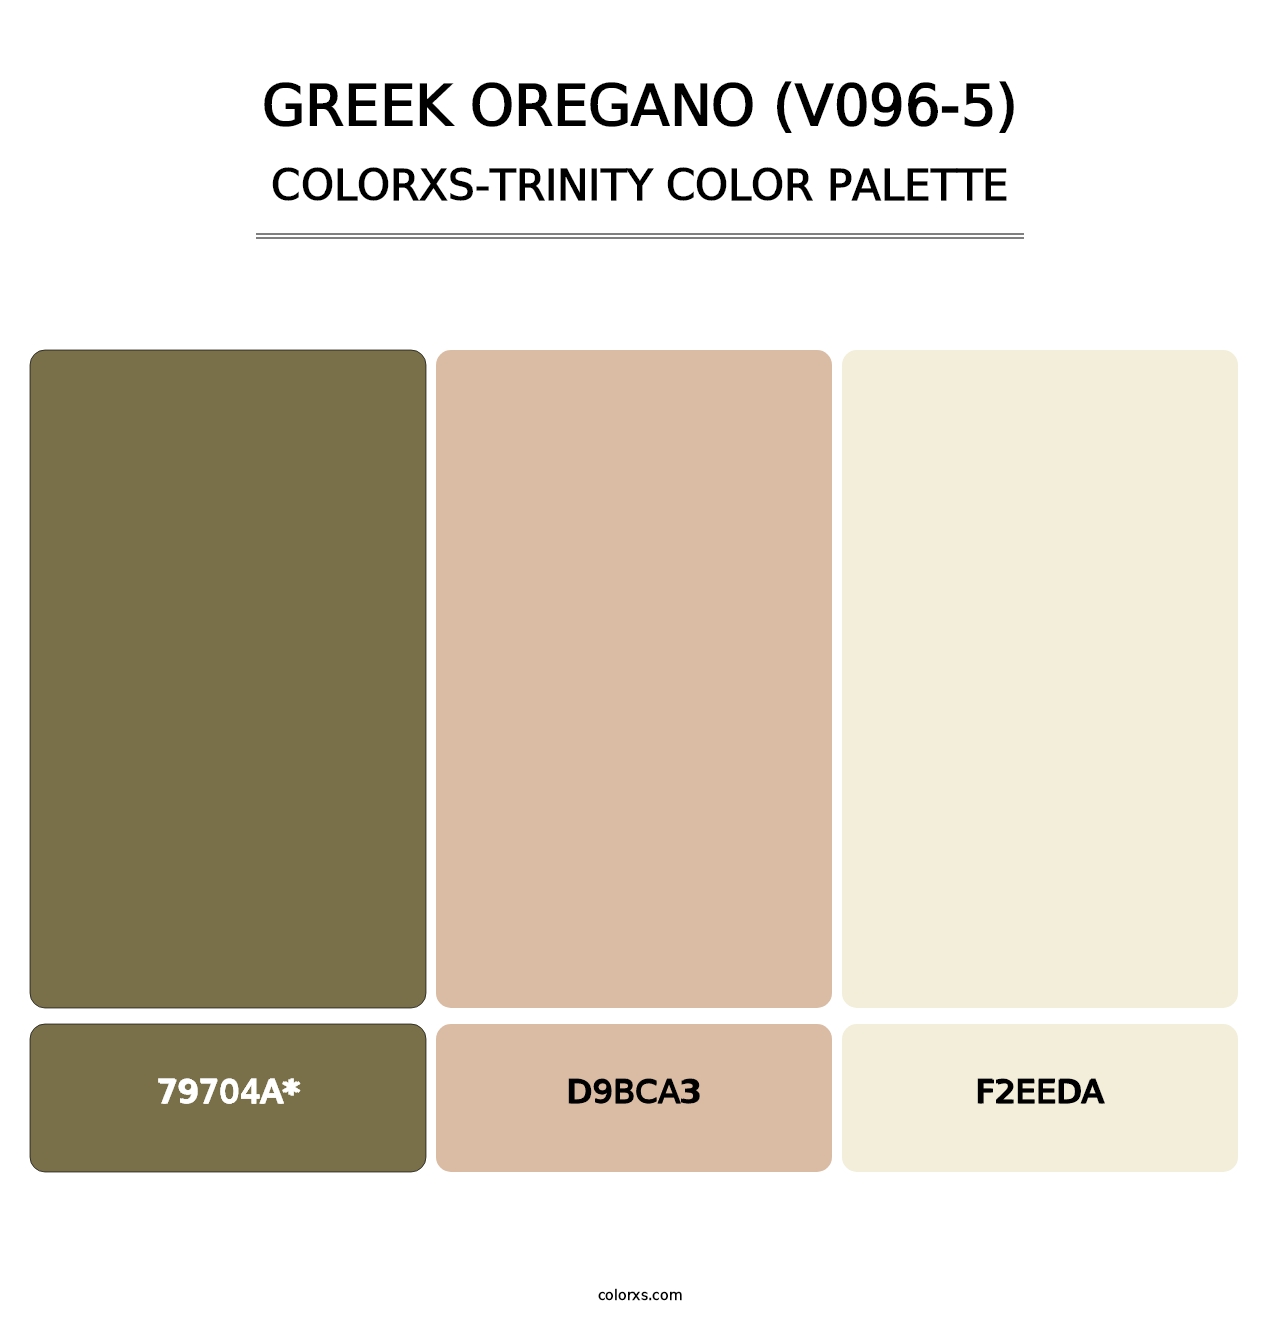 Greek Oregano (V096-5) - Colorxs Trinity Palette